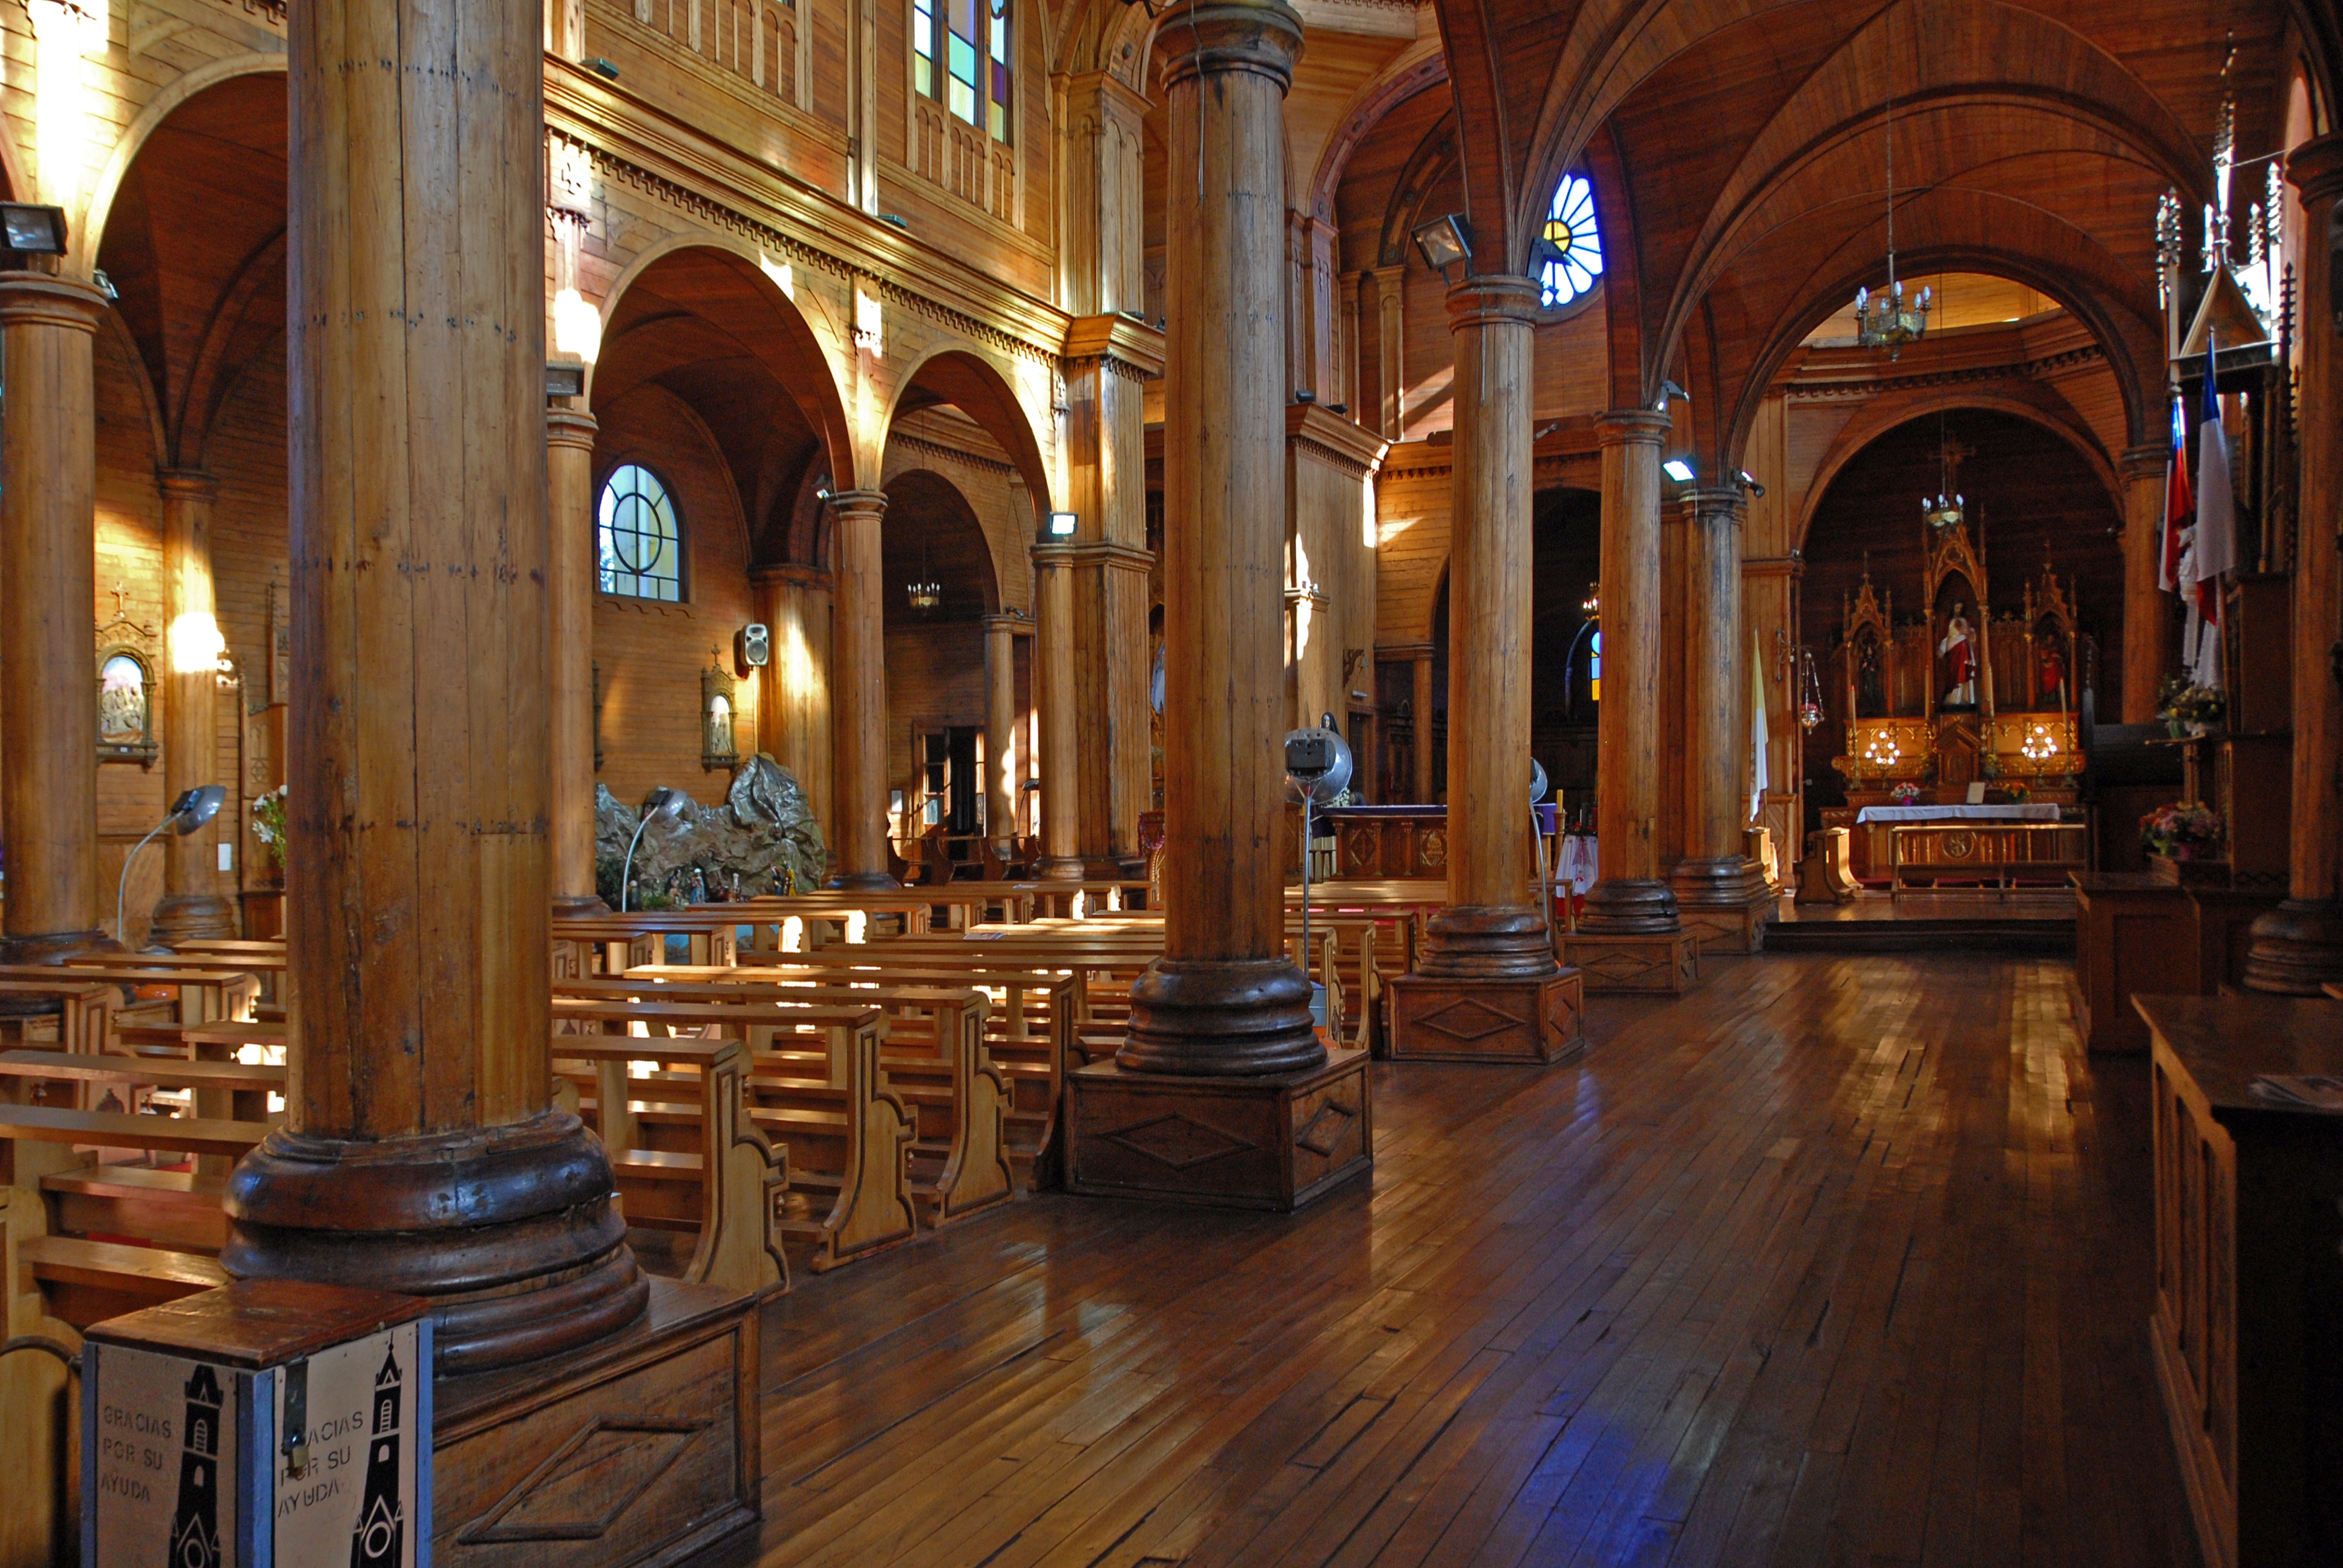 Drevená podlaha v kostole